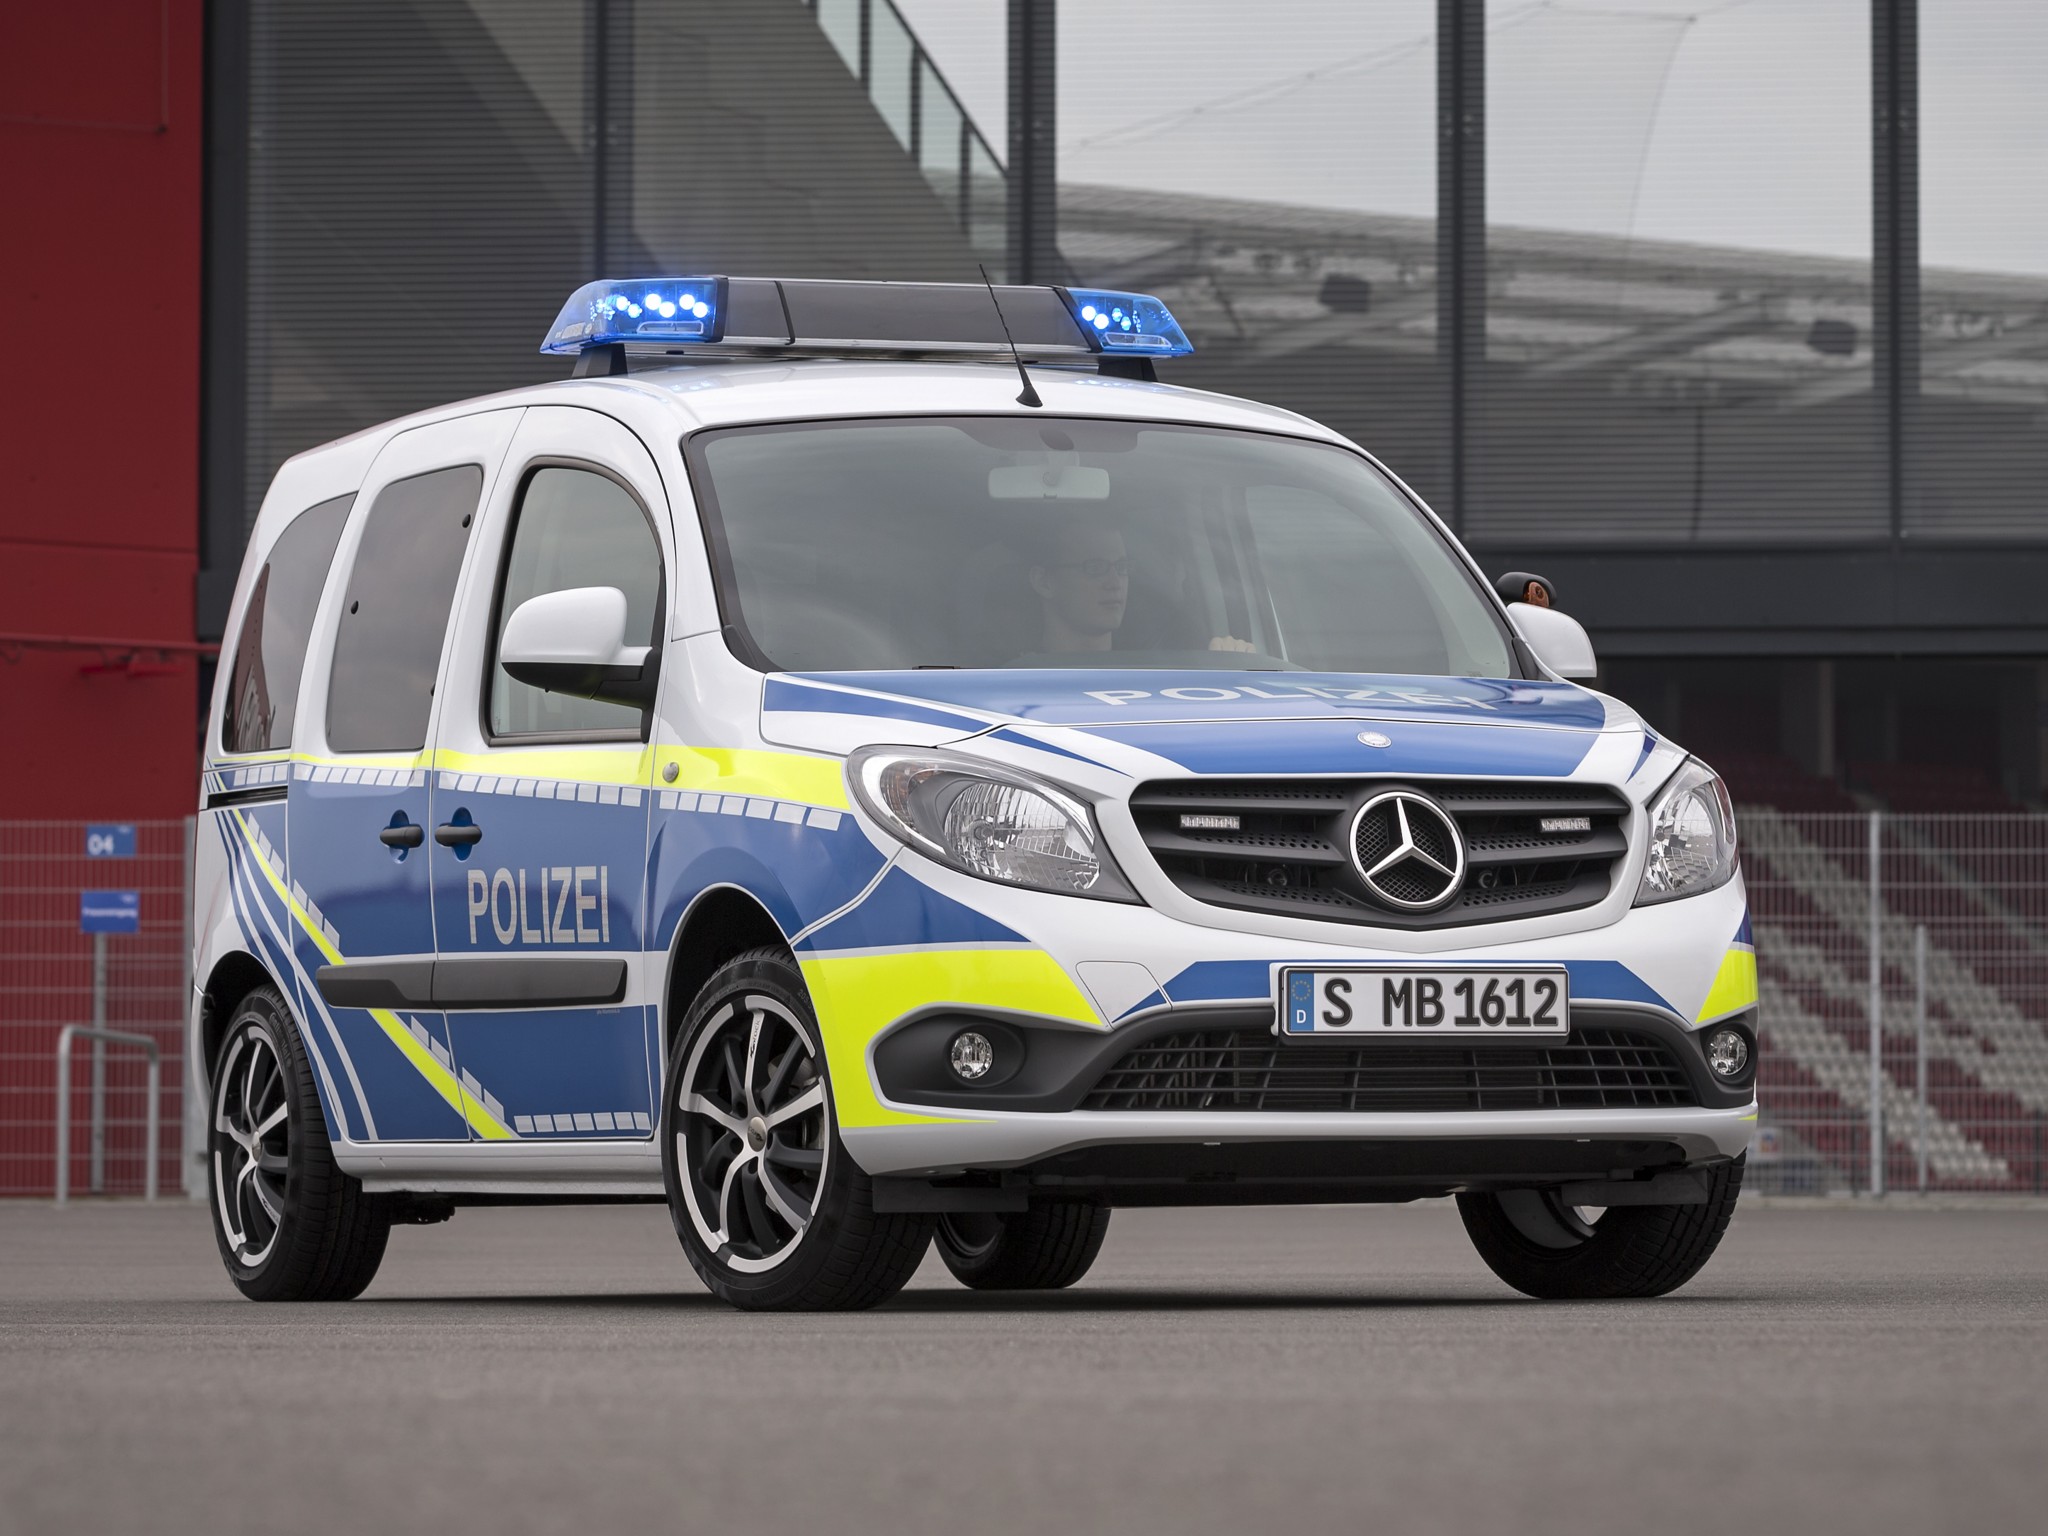 2013, Mercedes, Benz, Citan, Polizei, Emergency, Police, Emergency, Van Wallpaper